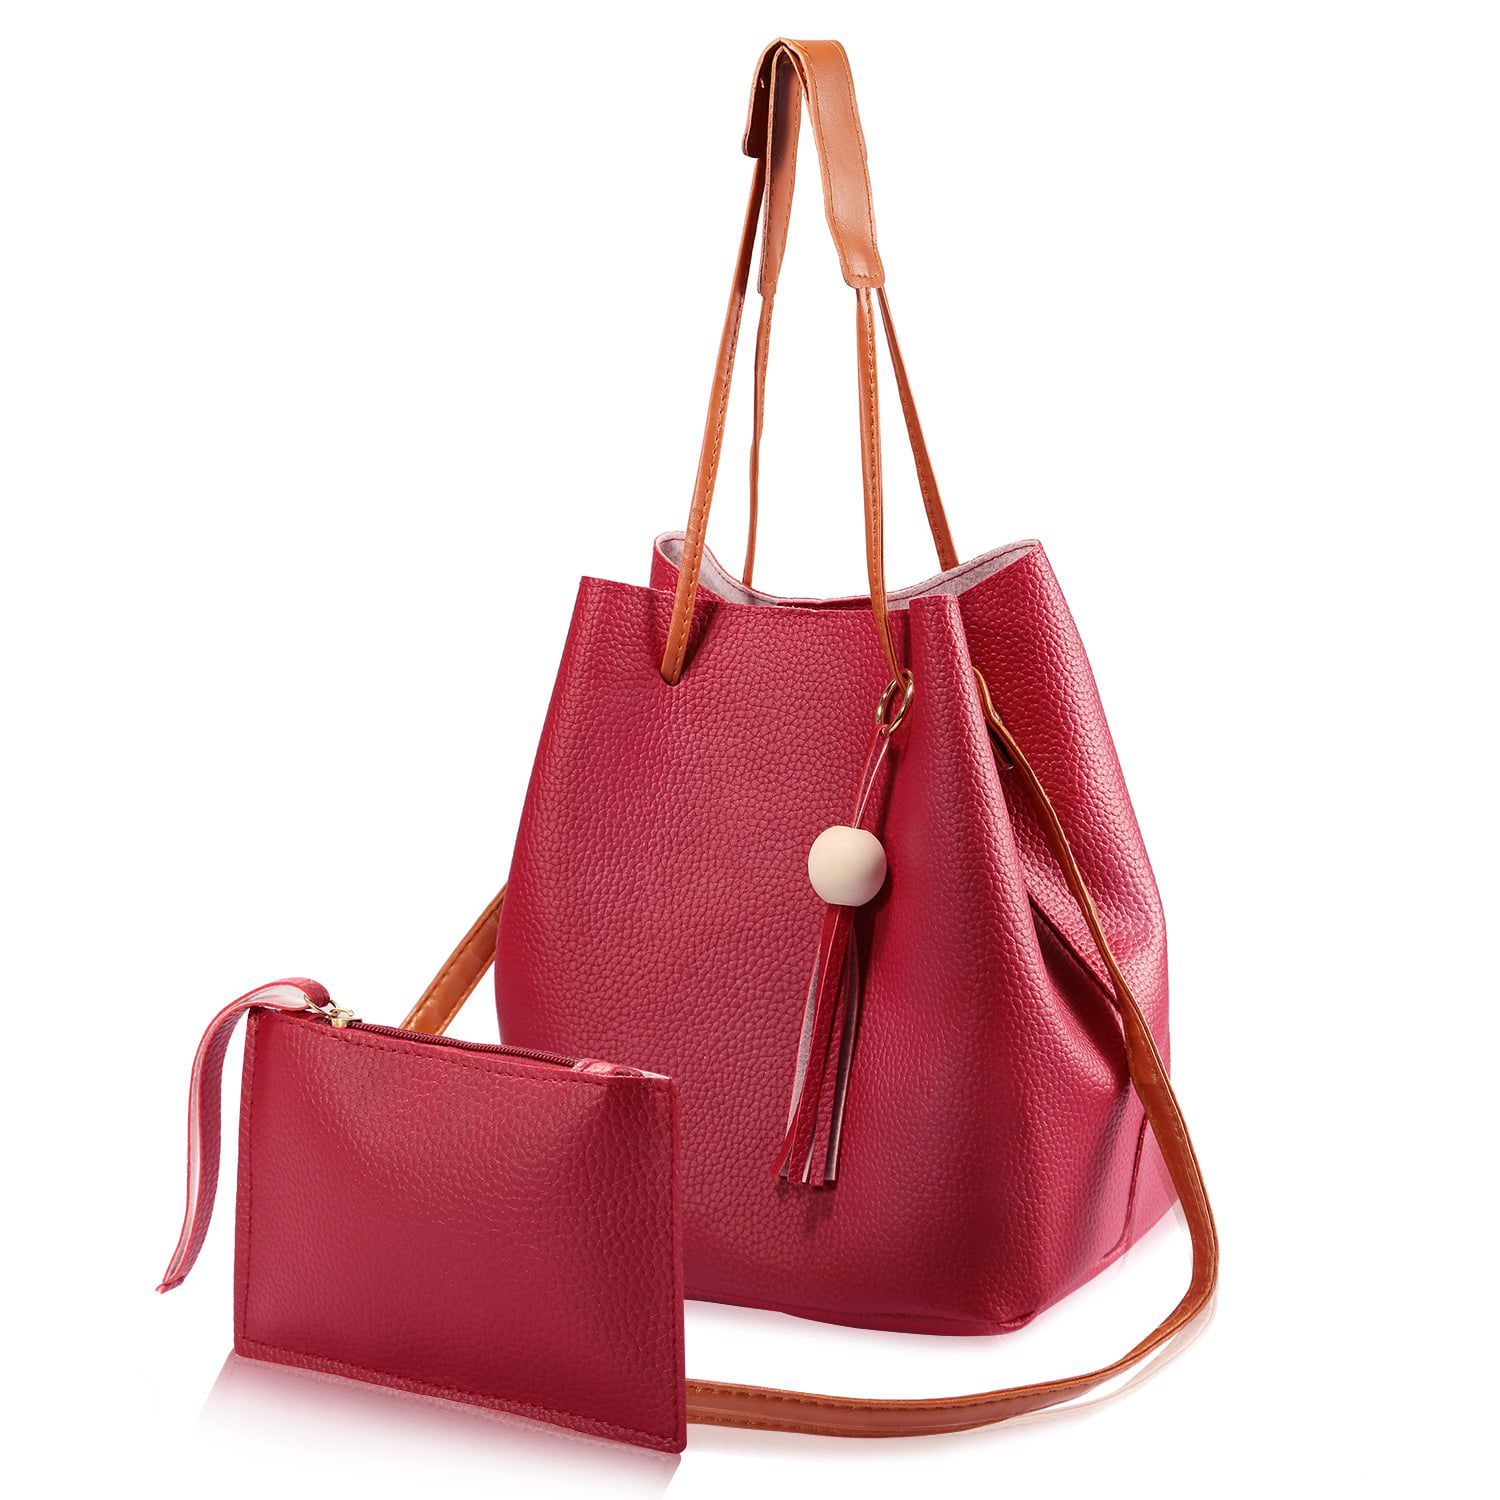 1Set/2Pcs Women Leather Handbags Shoulder Bags Lady Crossbody Bags Clutch Purse - www.neverfullmm.com